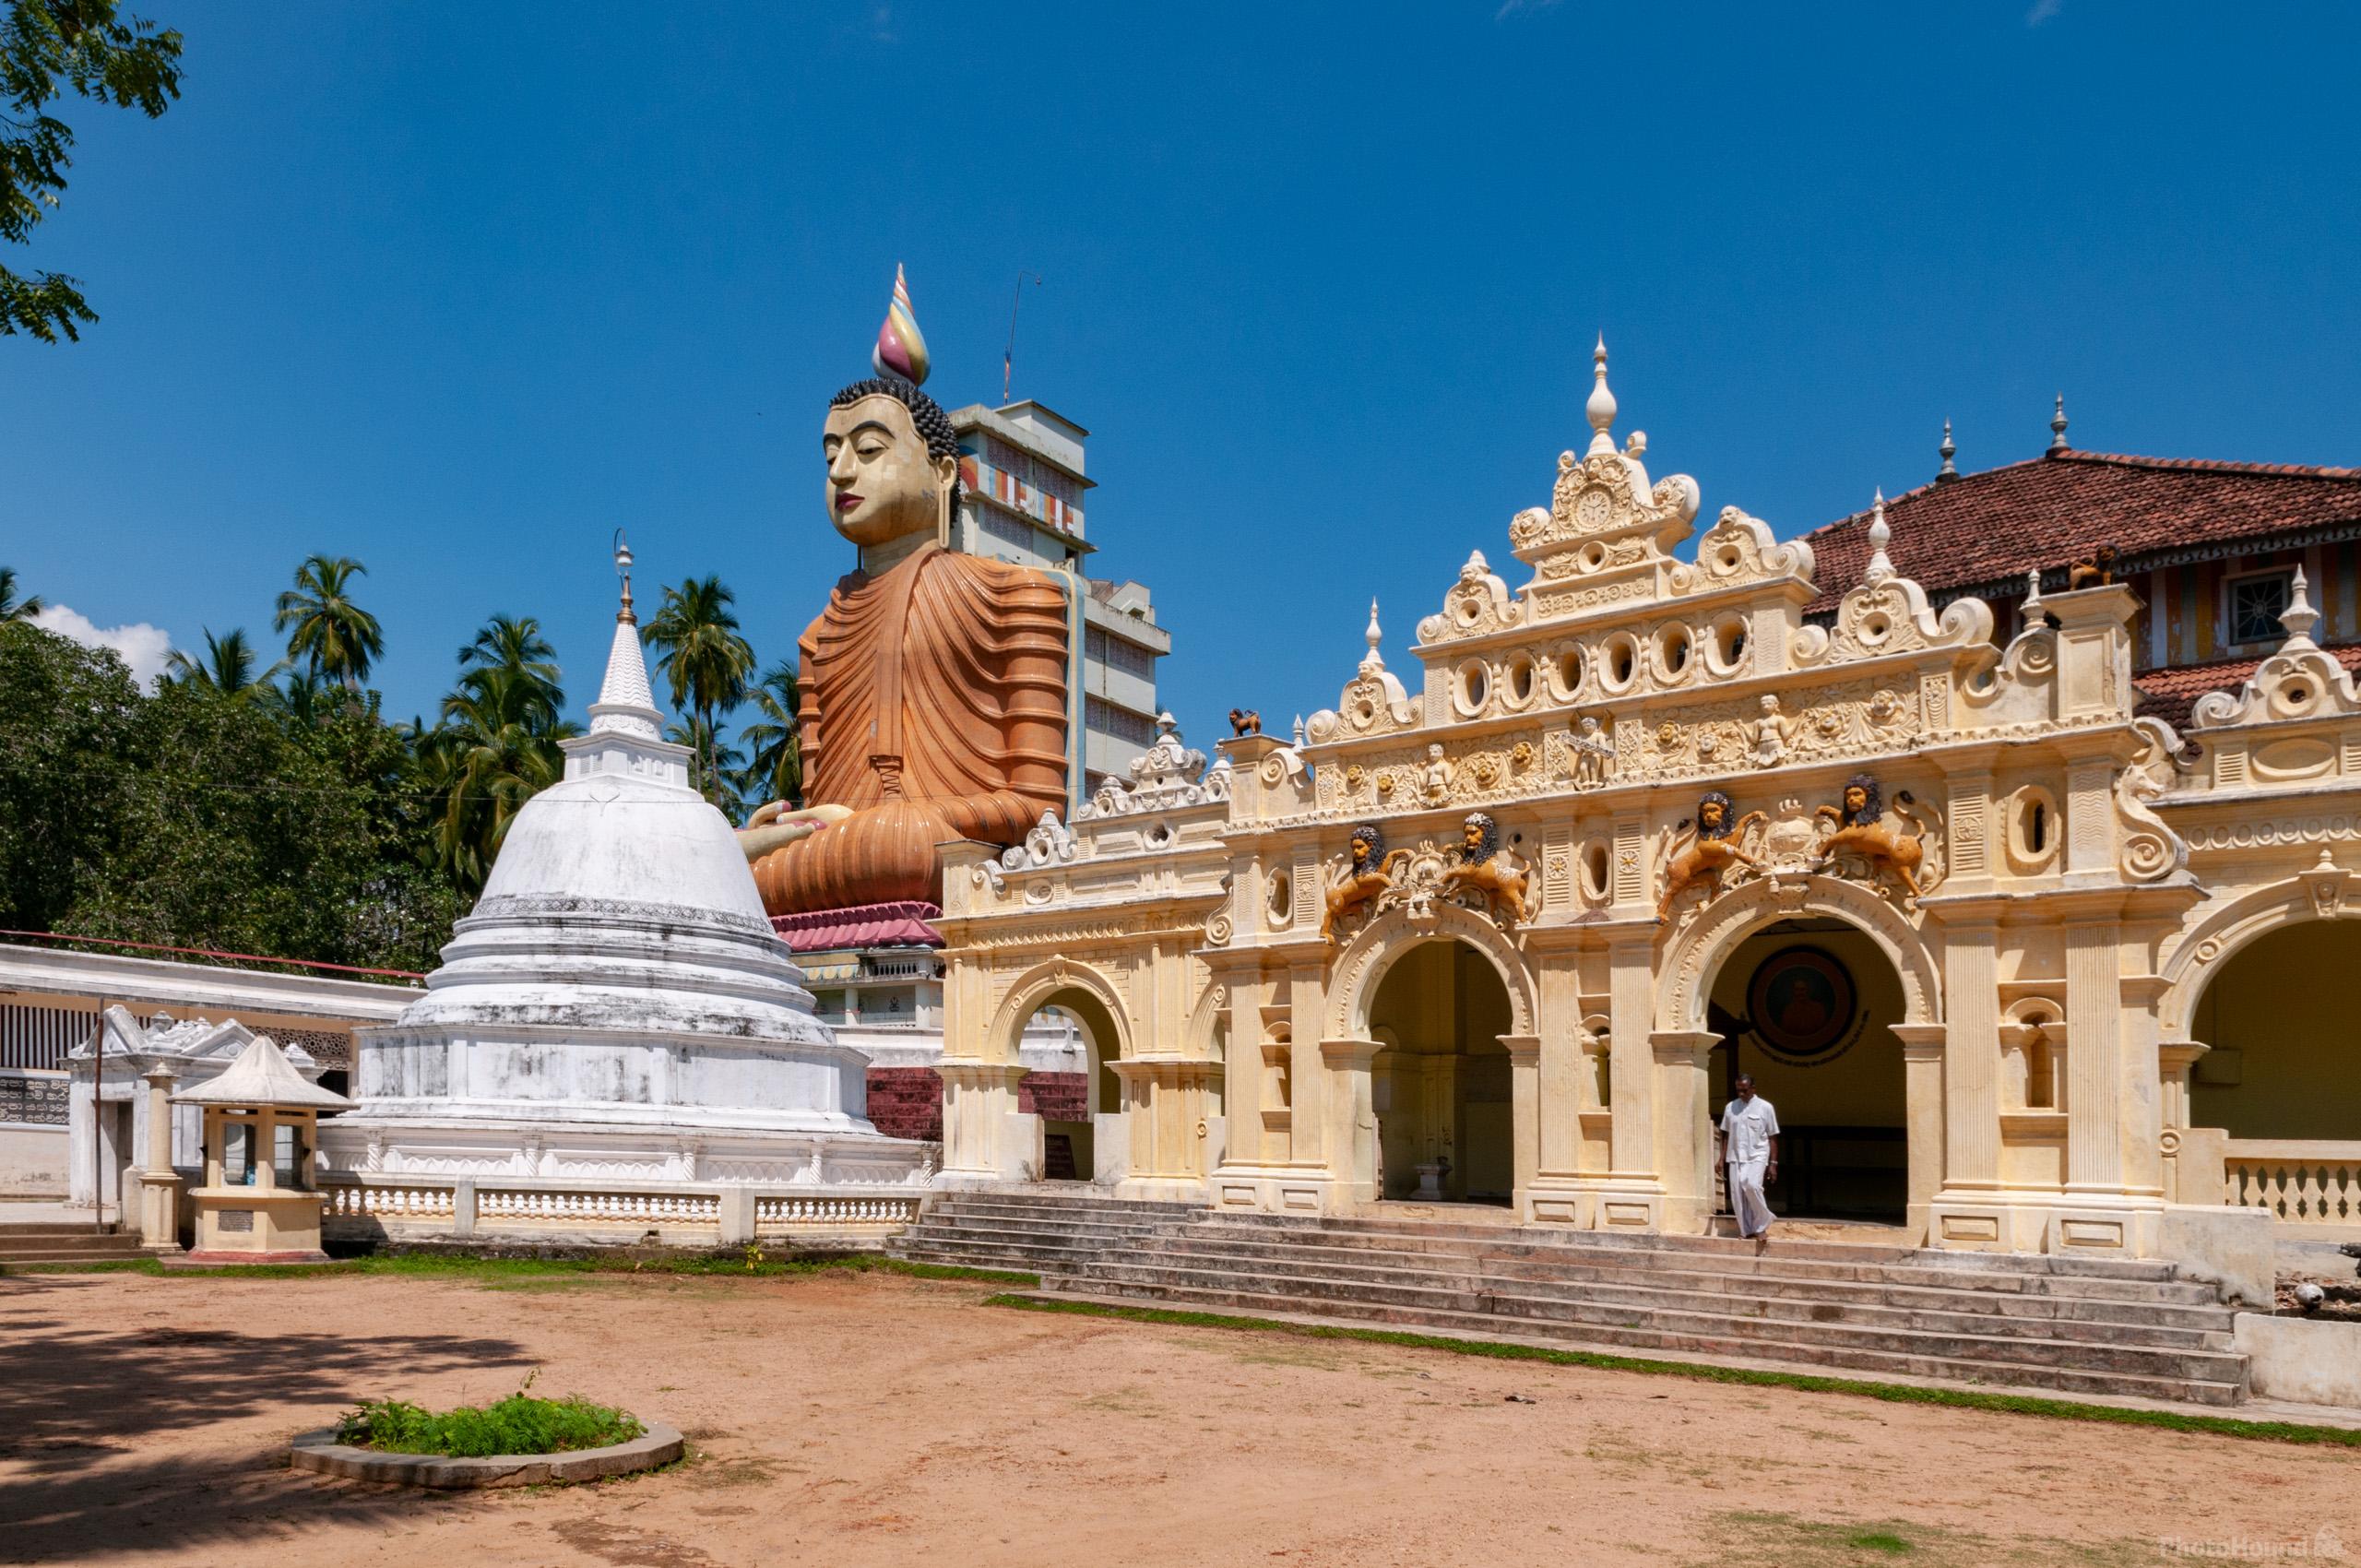 Sri Lanka photo locations